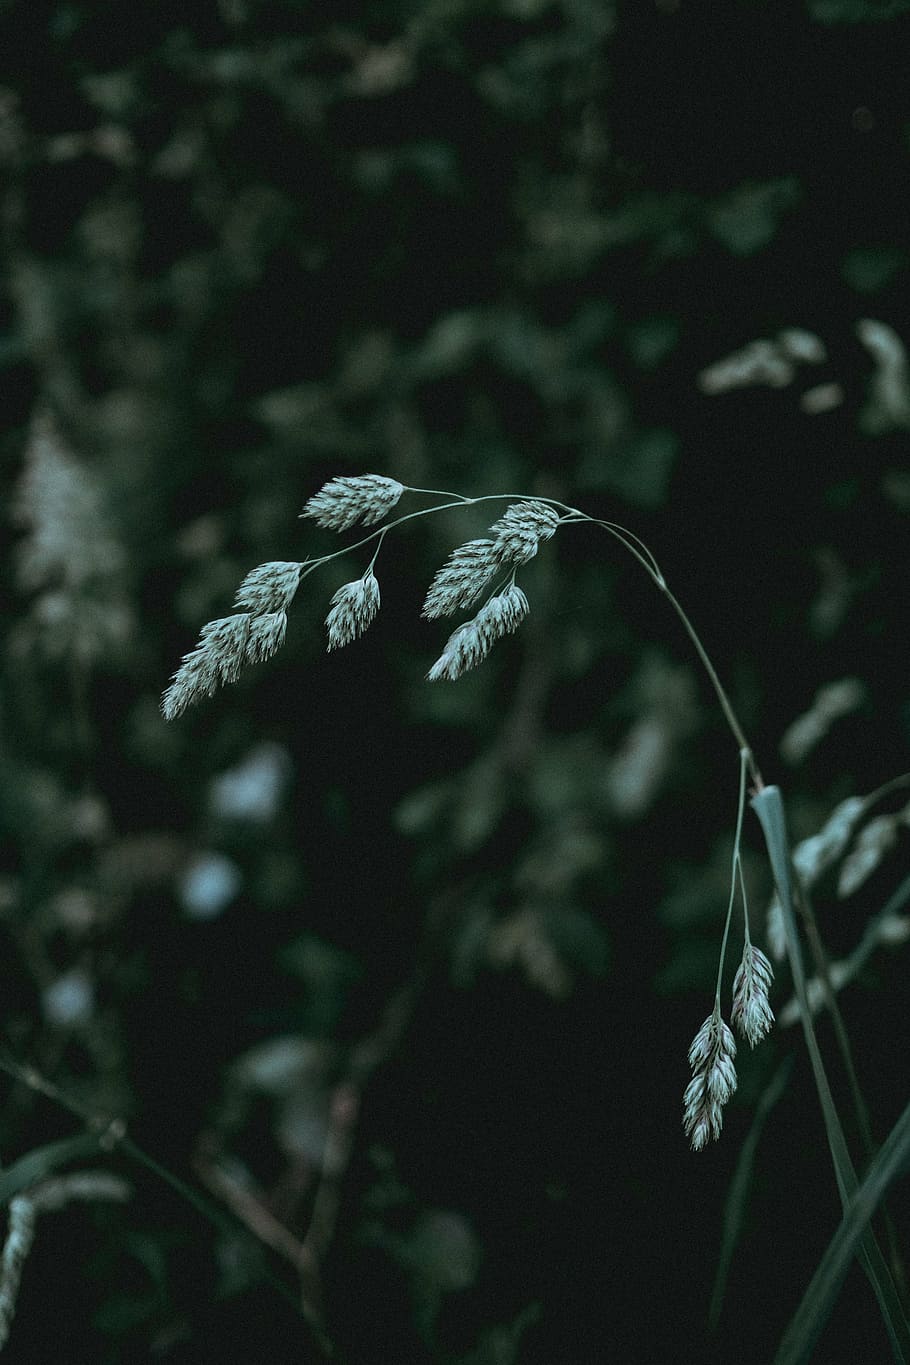 seletivo, foto de foco, verde, grama, escuro, ao ar livre, planta, natureza, crescimento, fragilidade